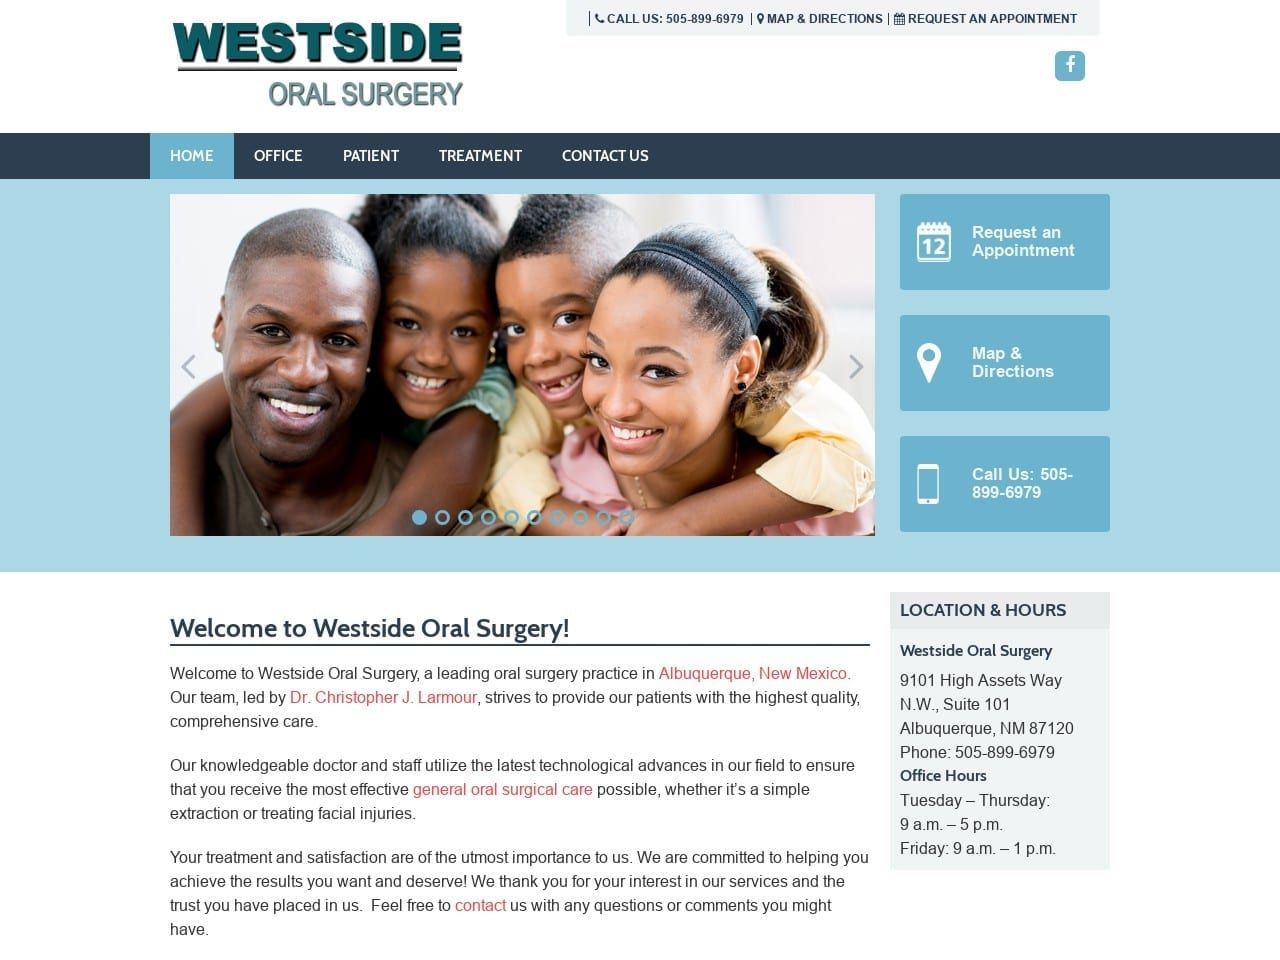 Westside Oral Surgery Website Screenshot from westsideos.com